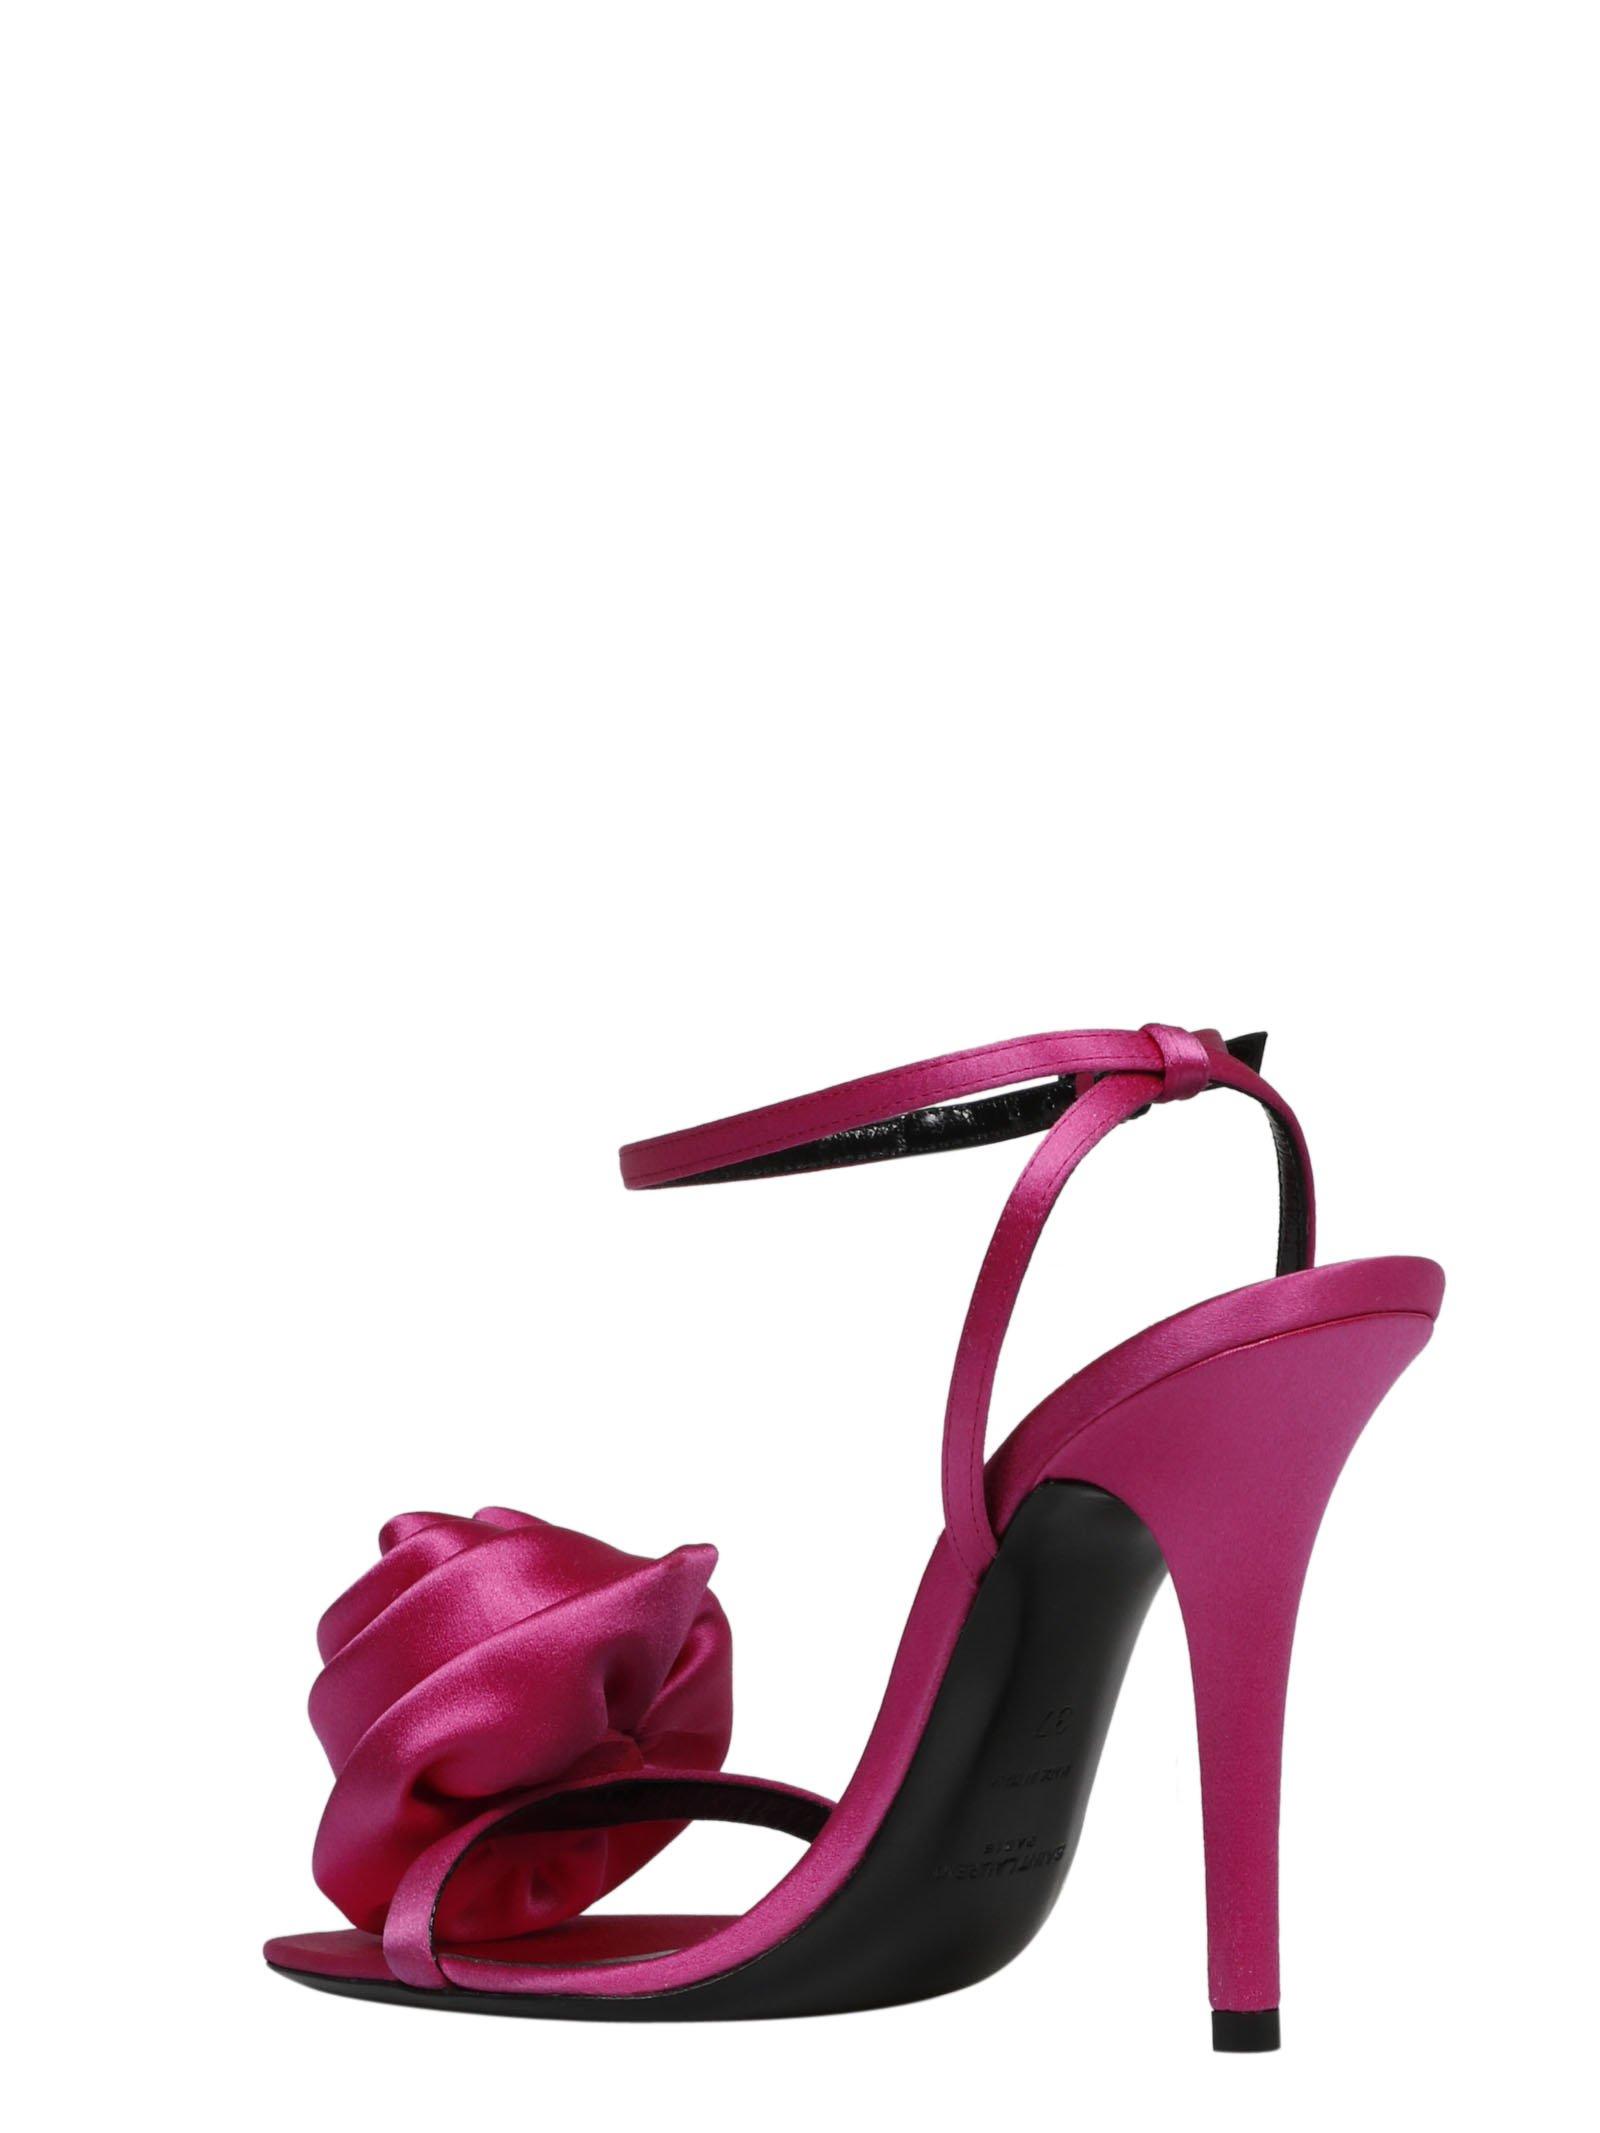 Saint Laurent Ivy Flower Sandals in Pink | Lyst